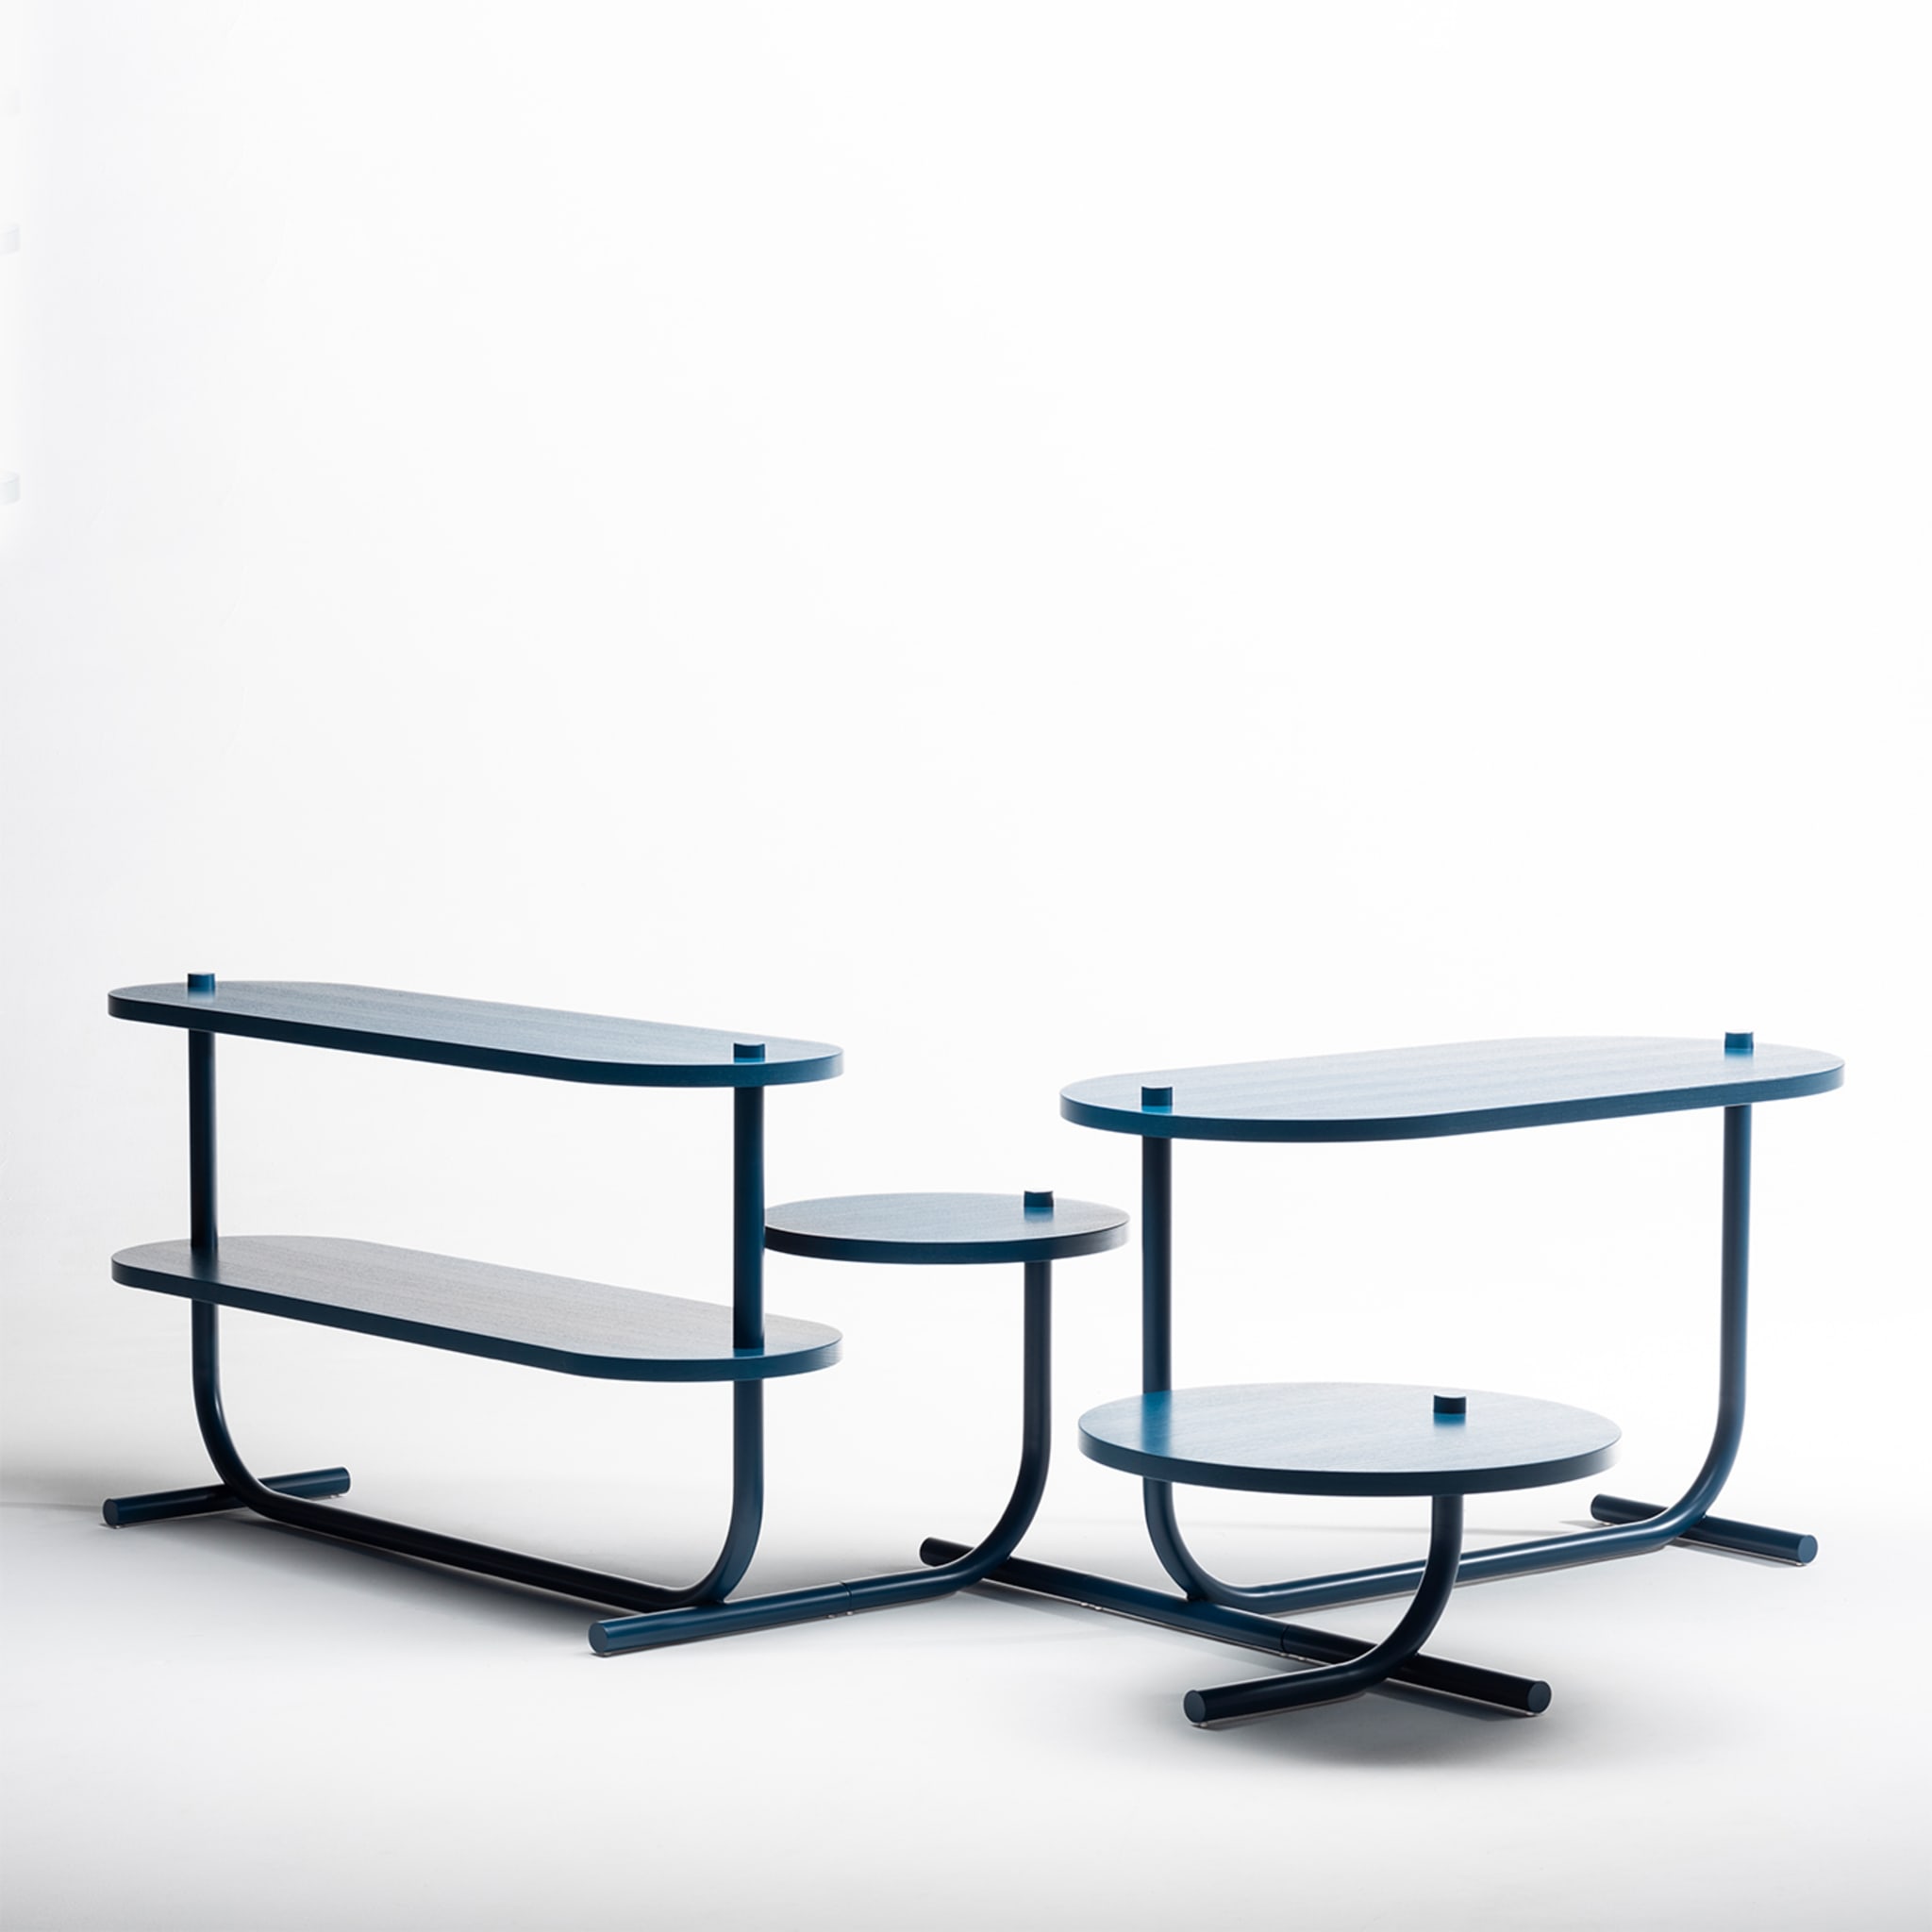 Bubalus T-SM Blue Side Table by Sovrappensiero Design Studio #1 - Alternative view 3